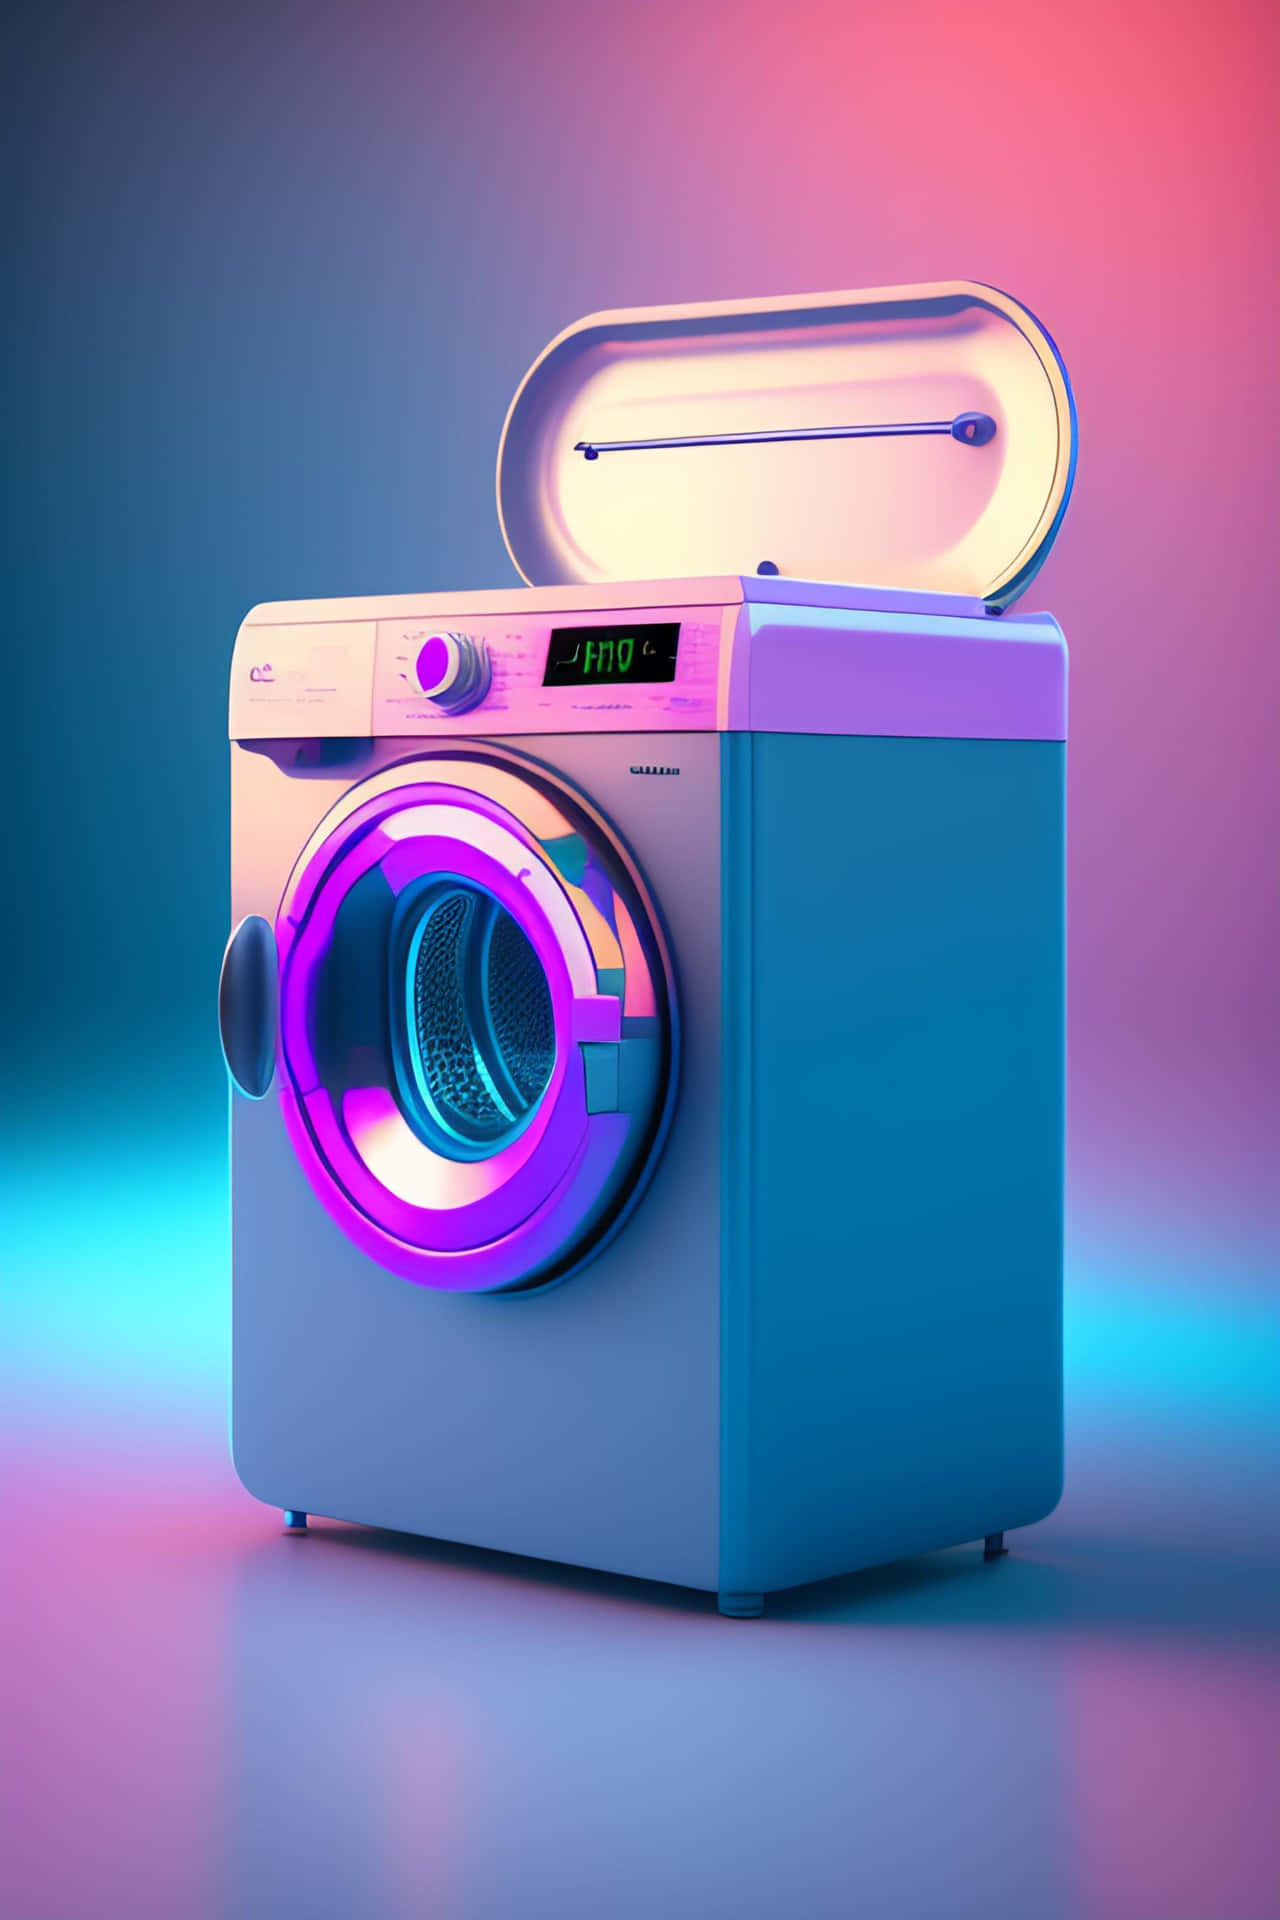 Futuristic Washing Machine Design Background